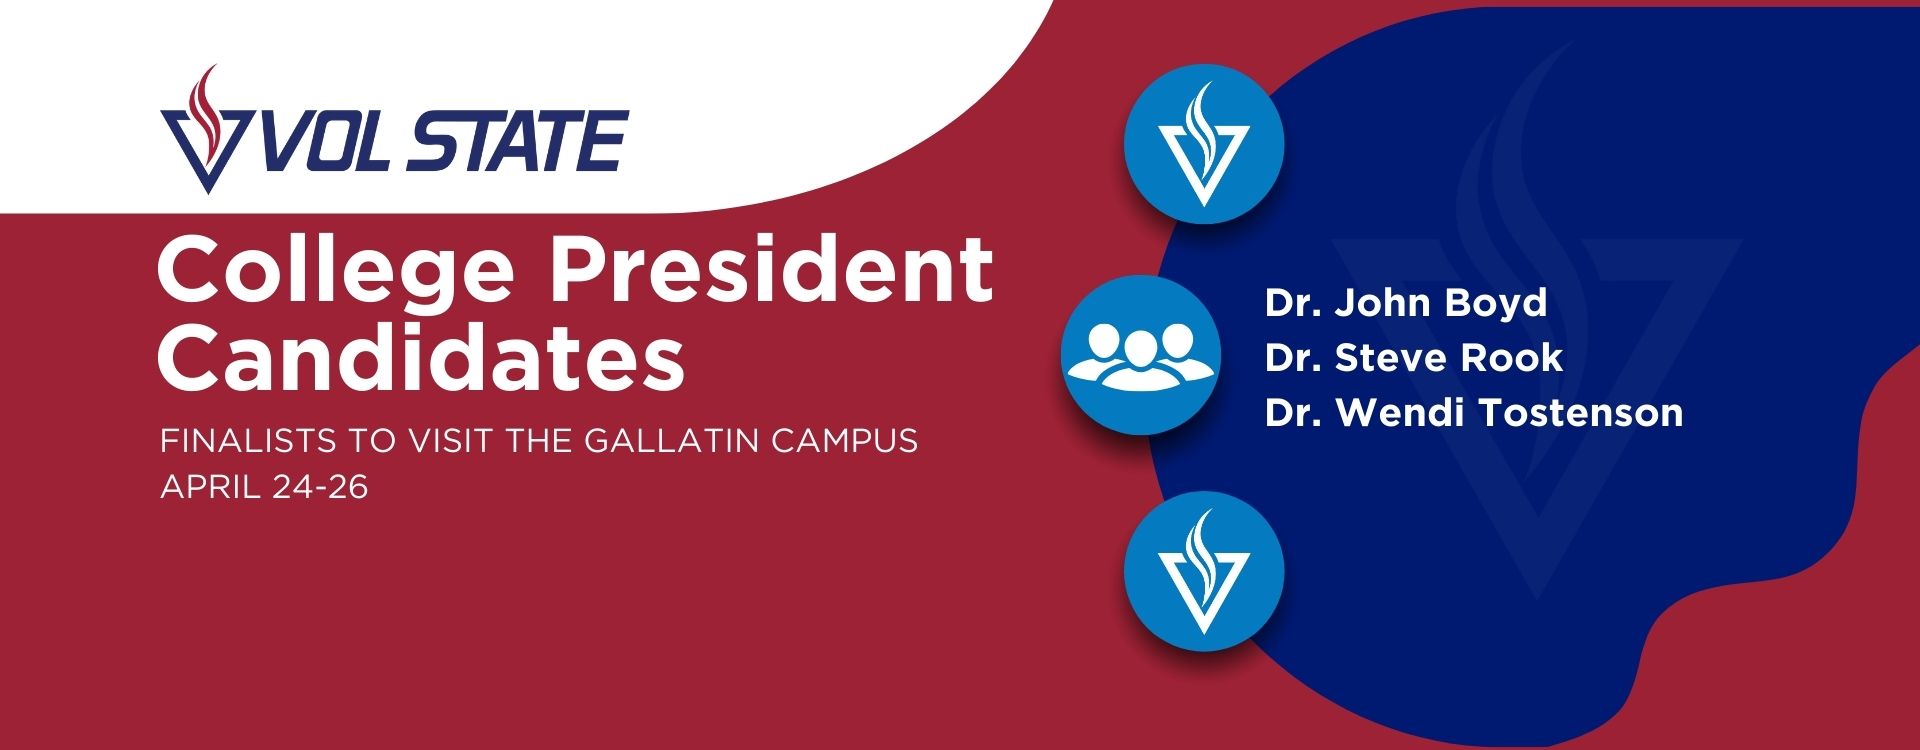 College President Candidates slideshow image